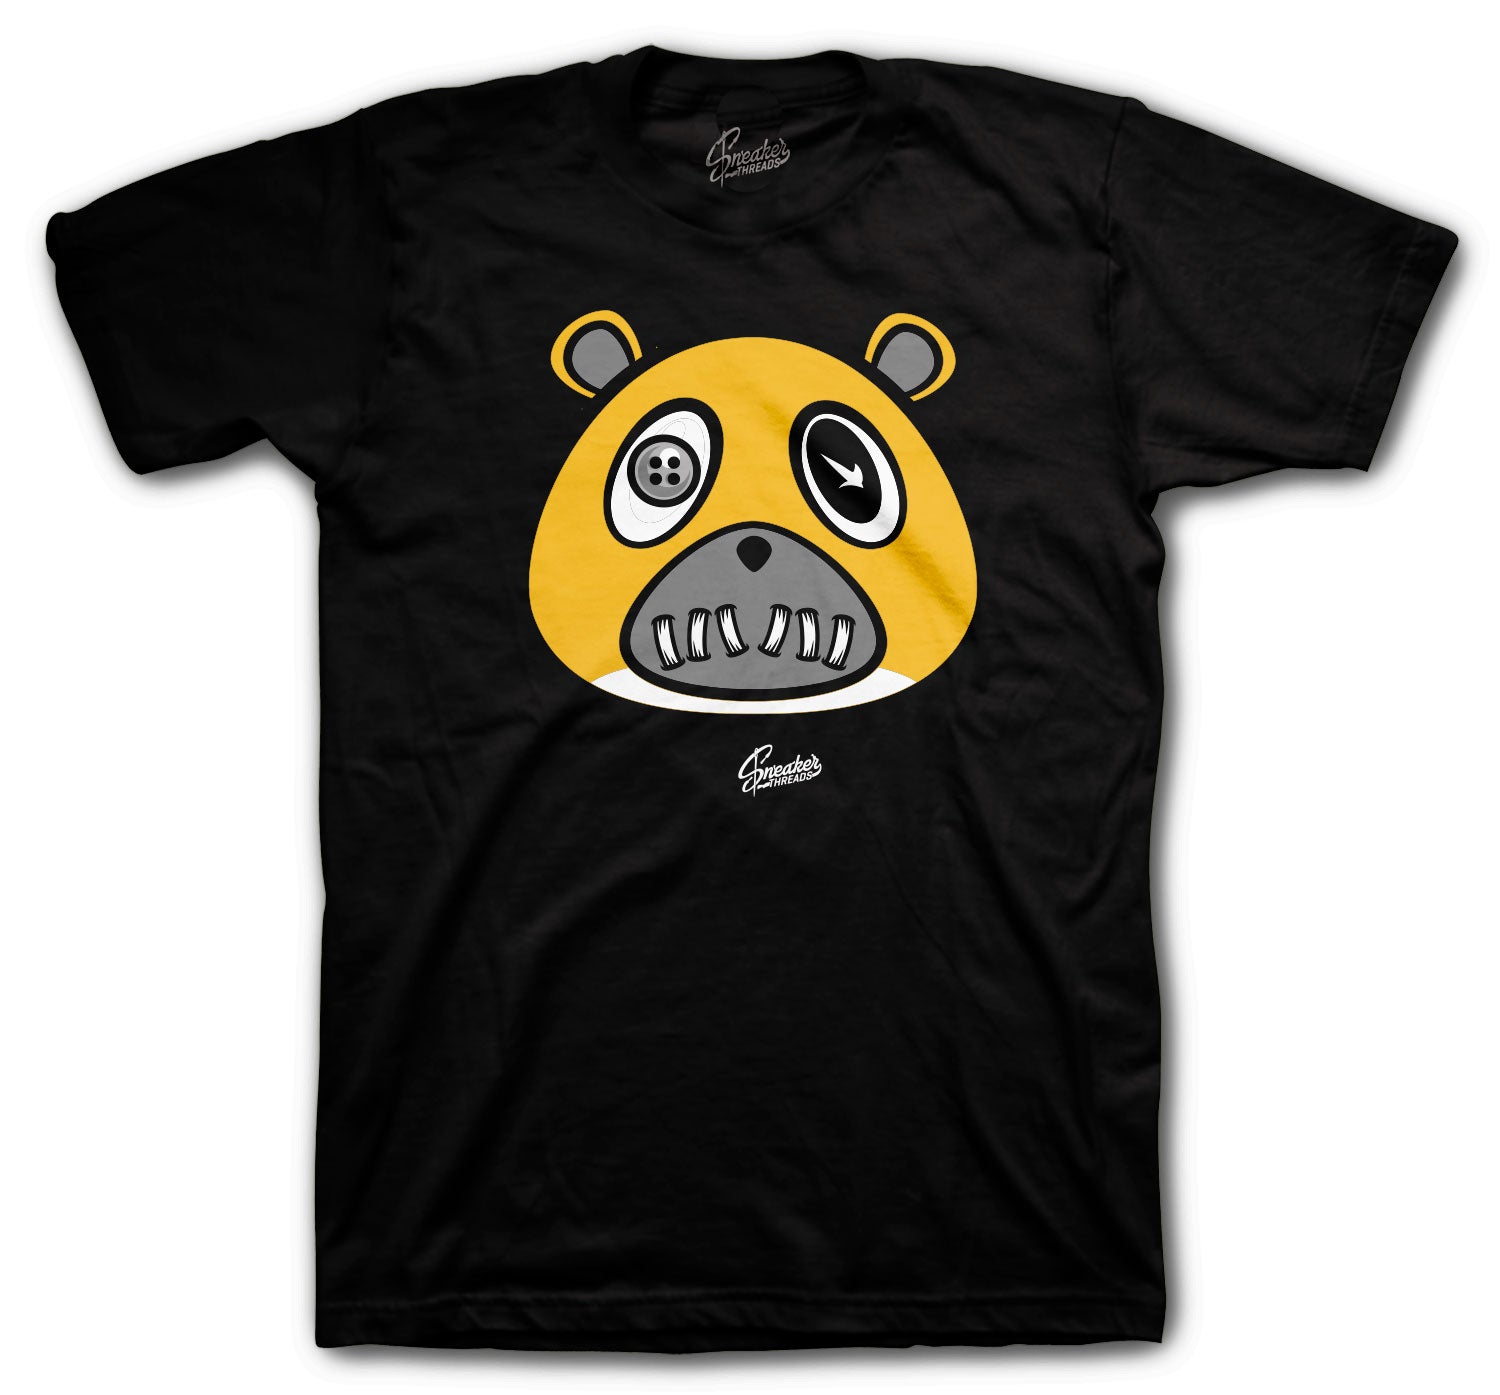 Retro 12 University Gold Shirt - ST Bear - Black